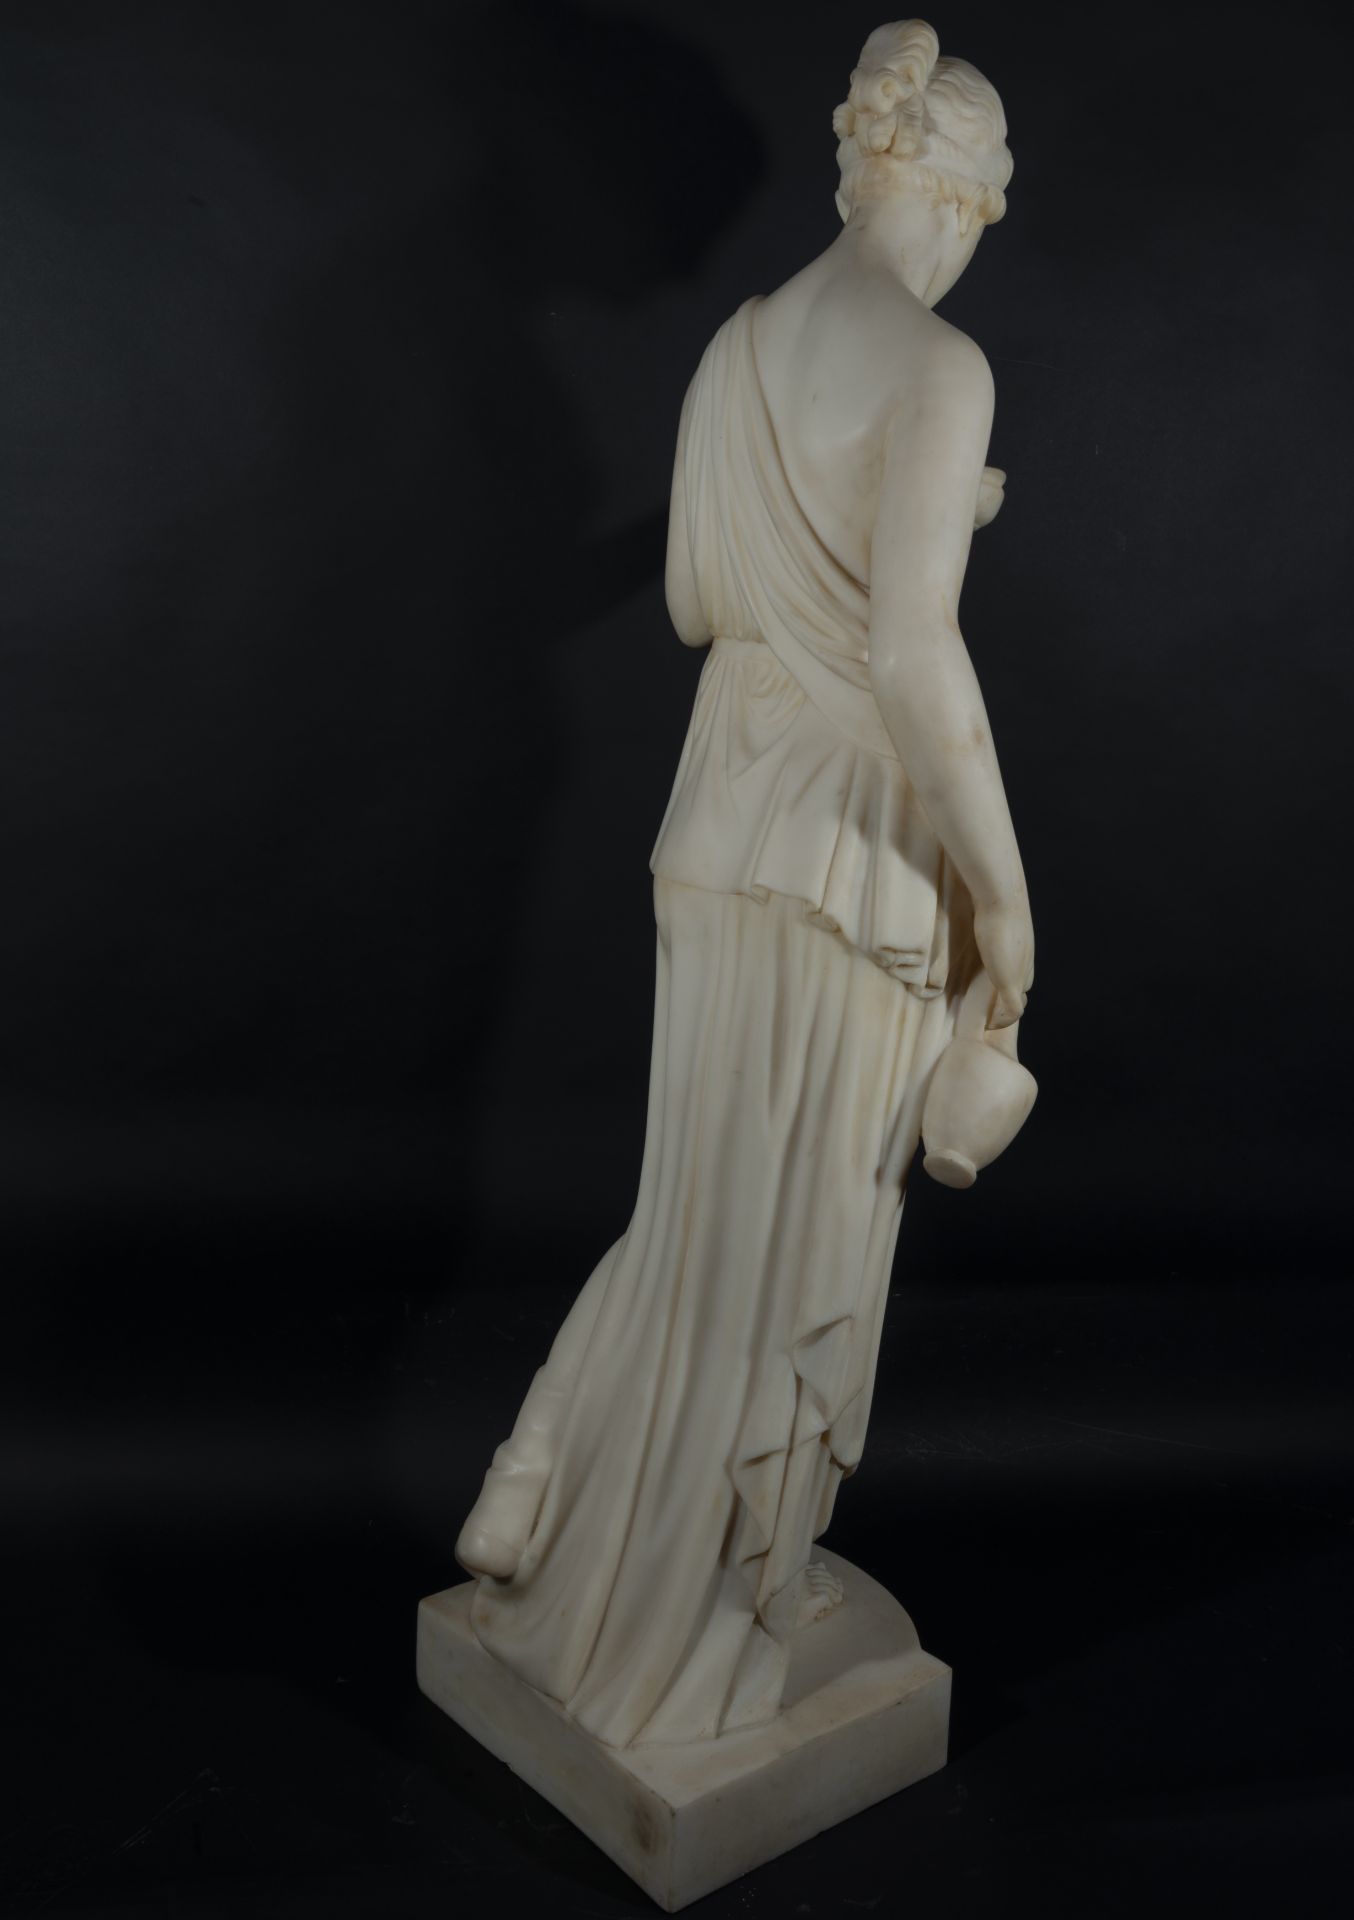 Large Decorative Italian Venus in carved Italian Alabaster for interior decoration, 20th century - Image 5 of 6